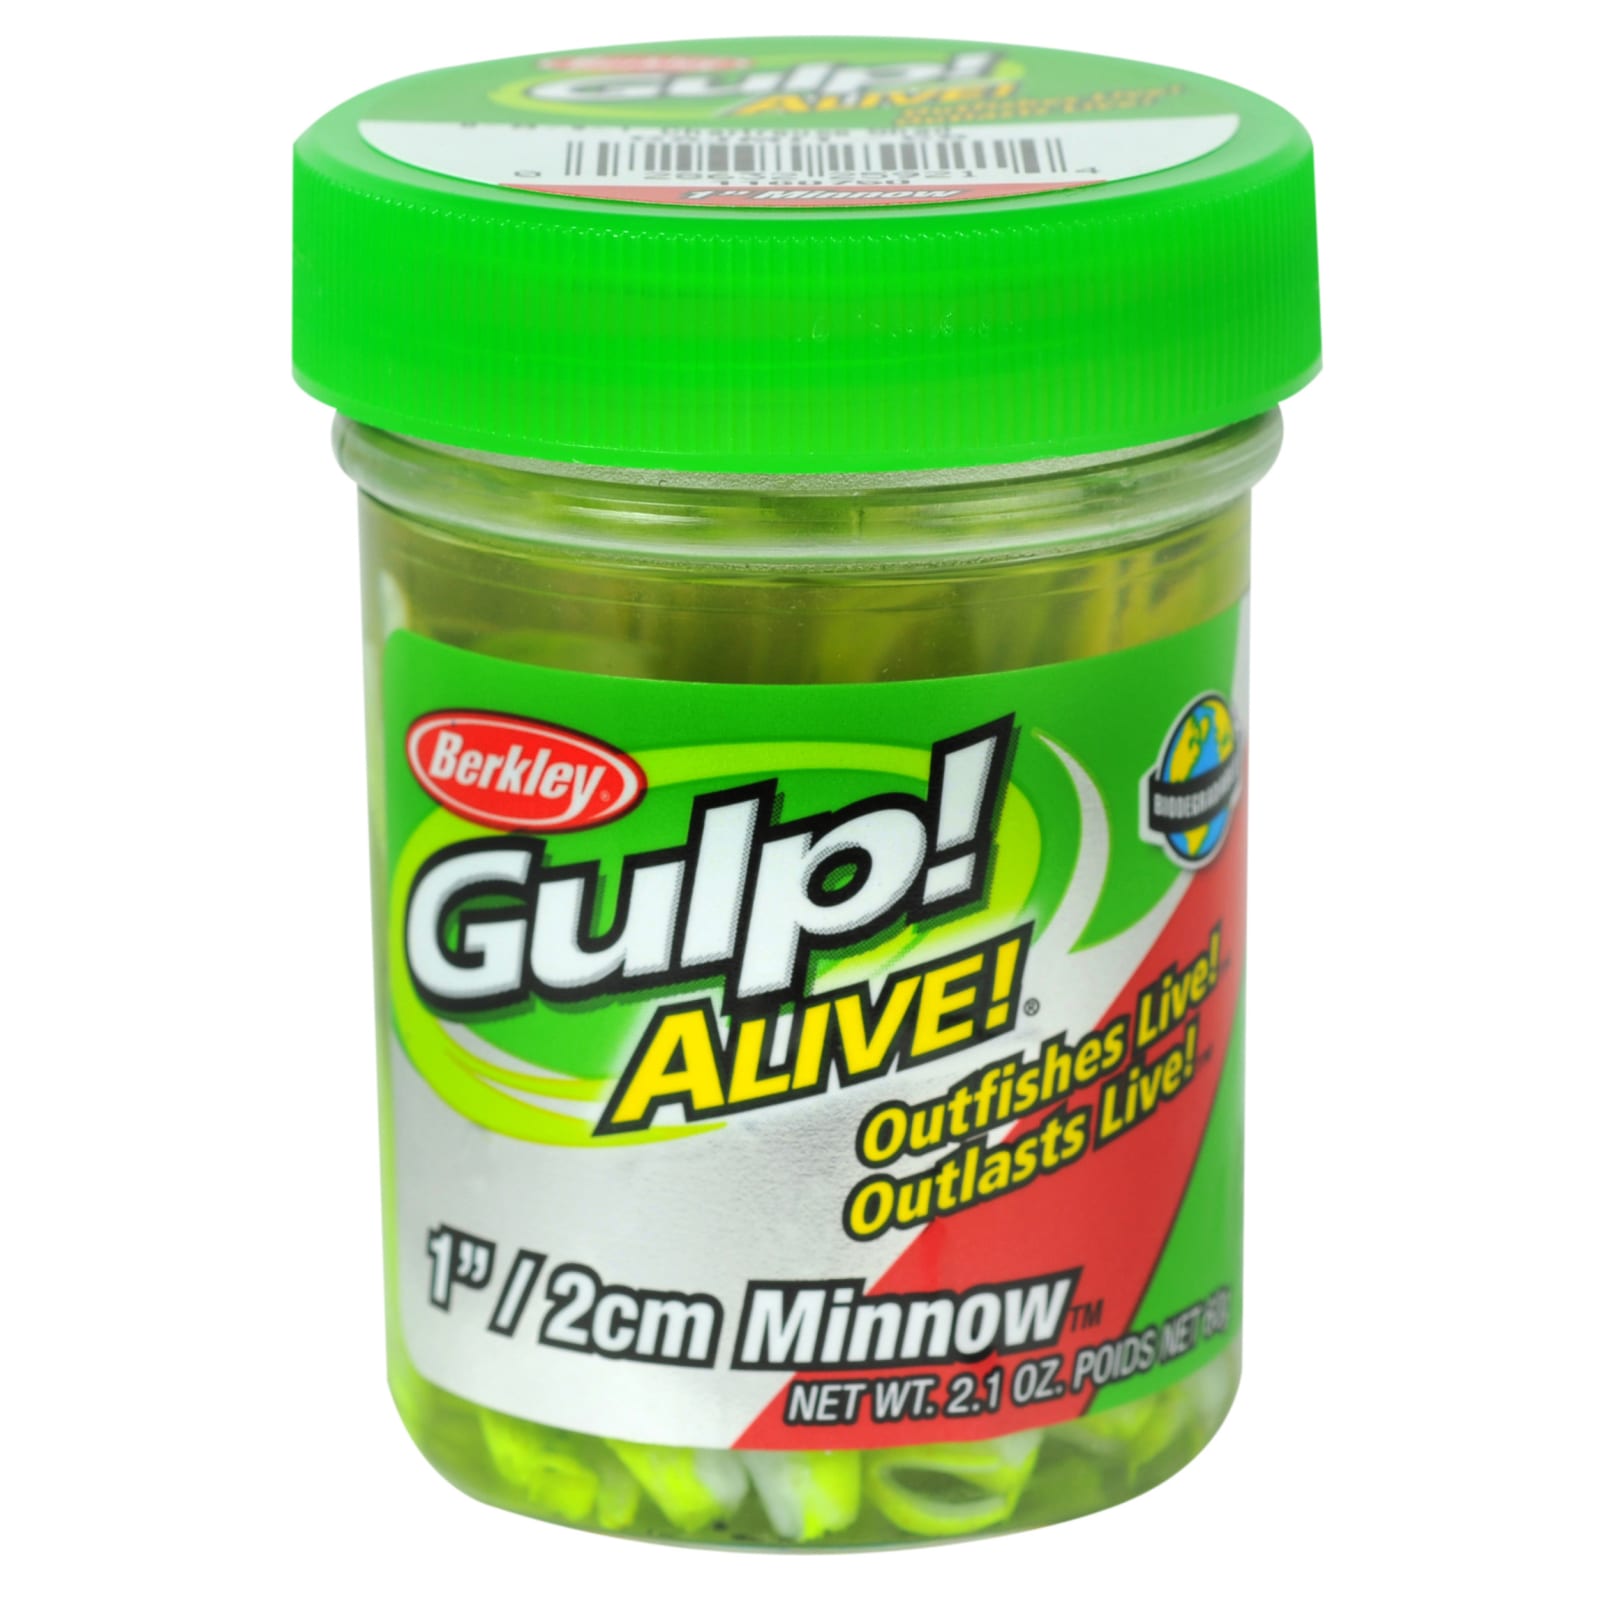 Gulp! Alive! Chartreuse Shad Minnow Bait by Berkley at Fleet Farm